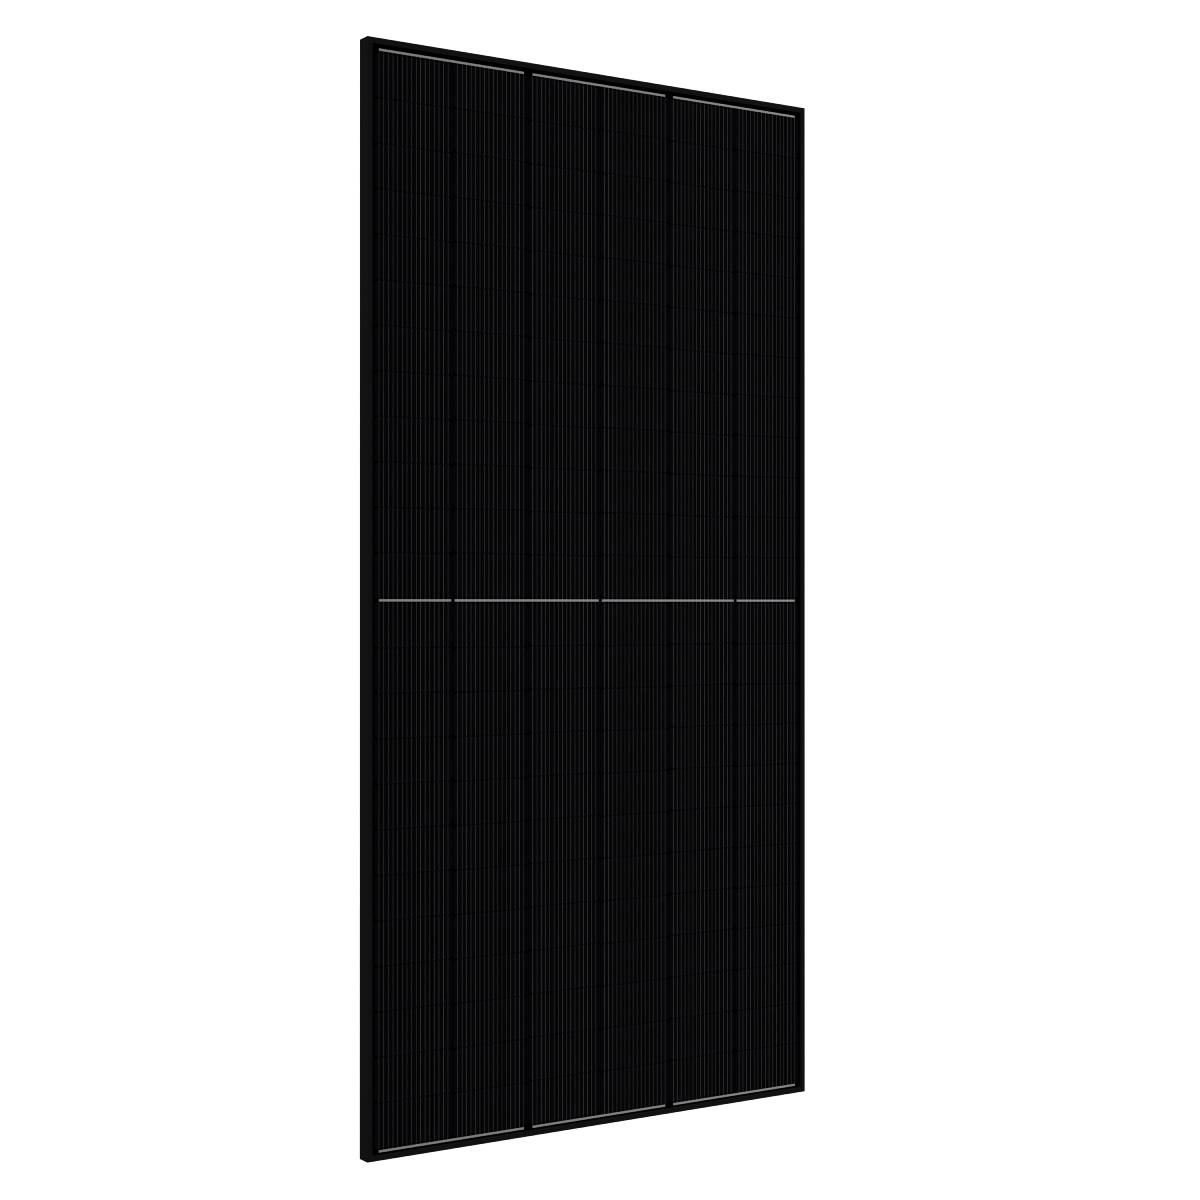 TommaTech 590Wp 144TNFB M10 Topcon Dark Series Solar Panel